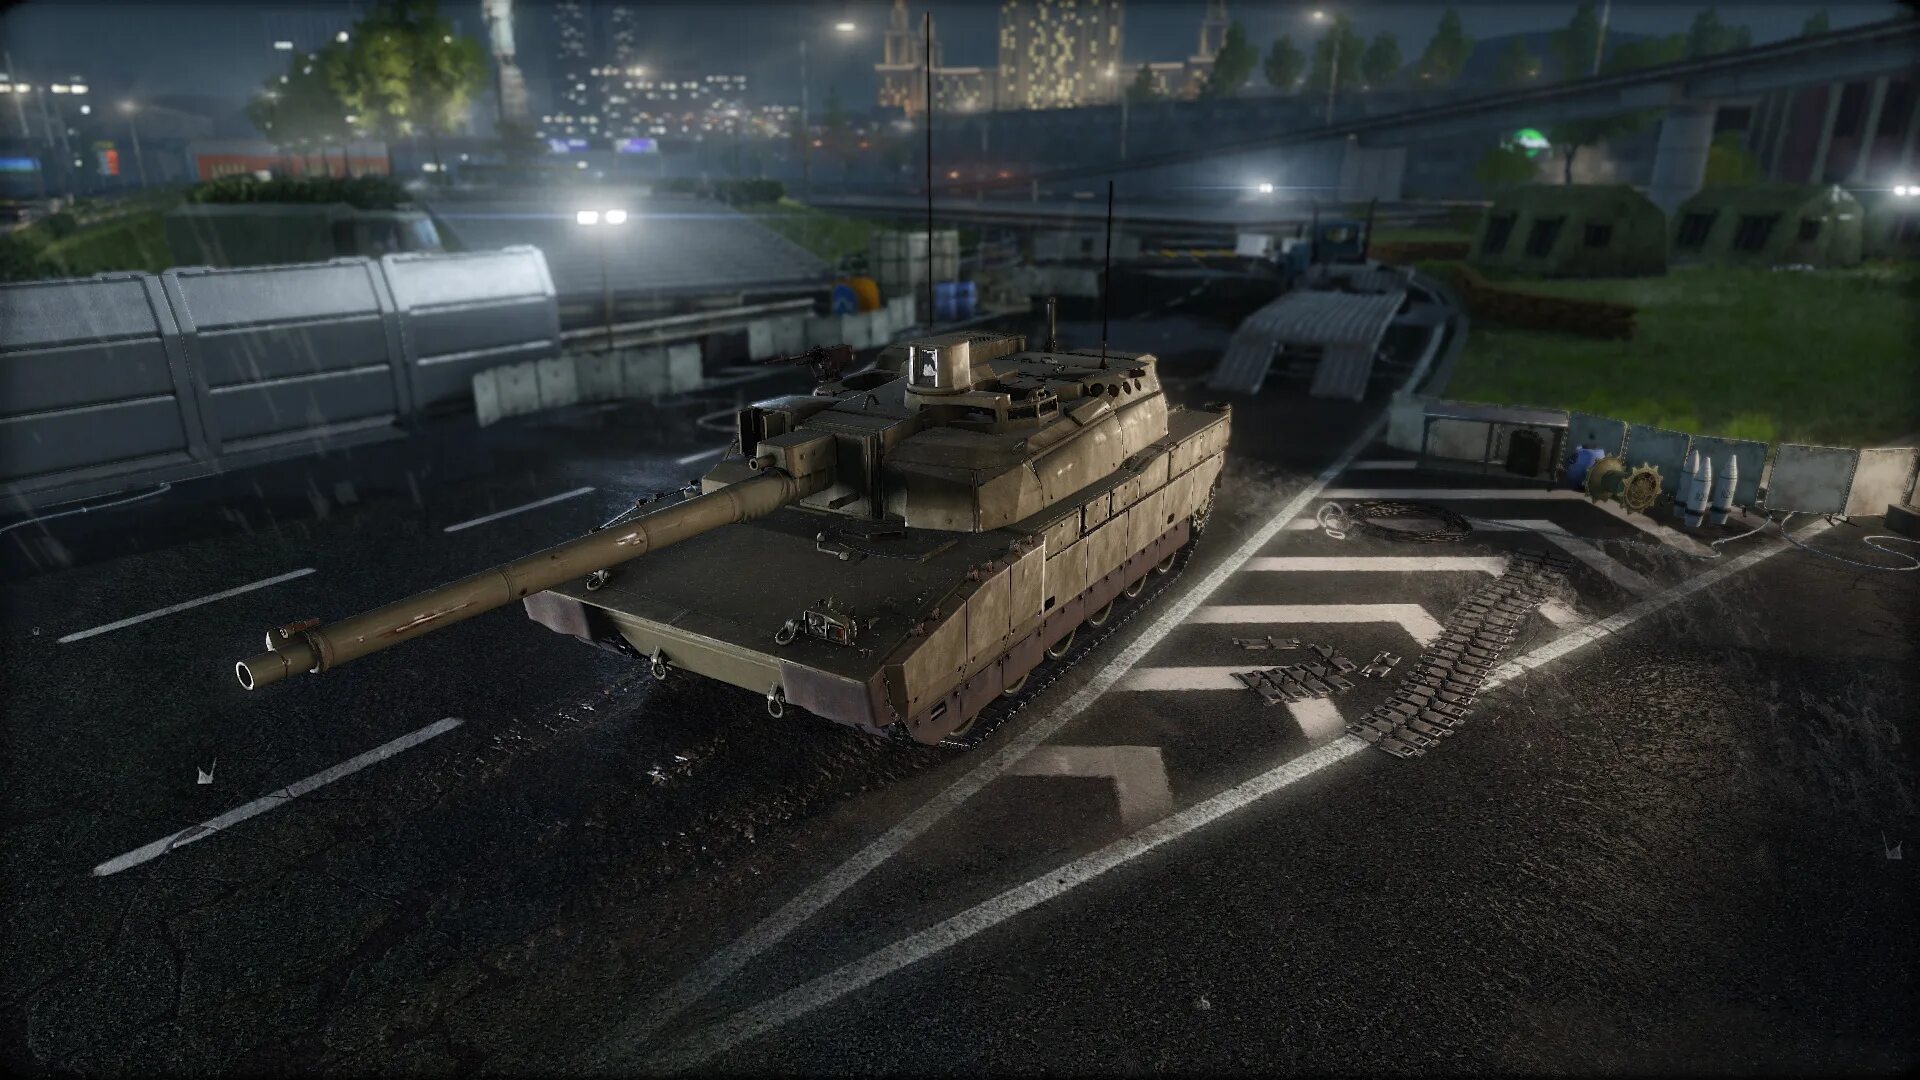 Проект армата официальная игра. Armored Warfare: Армата. Армата танк игра. Леклерк арморед варфаре. Проект Армата техника.